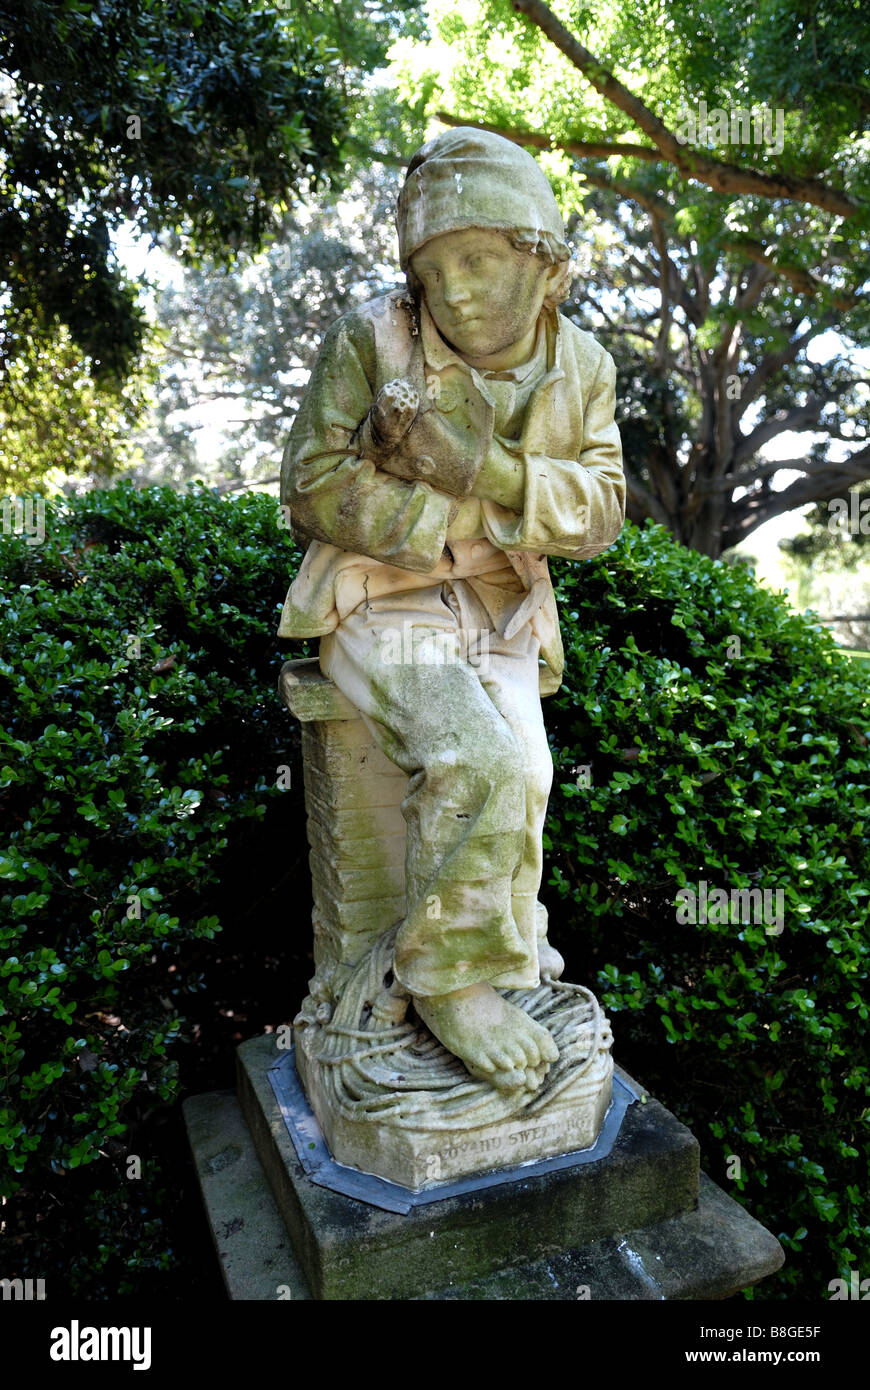 Statue of a sweep boy from the Donizetti opera ‘Linda da Chamonix’. Royal Botanic Gardens, Sydney, Australia Stock Photo